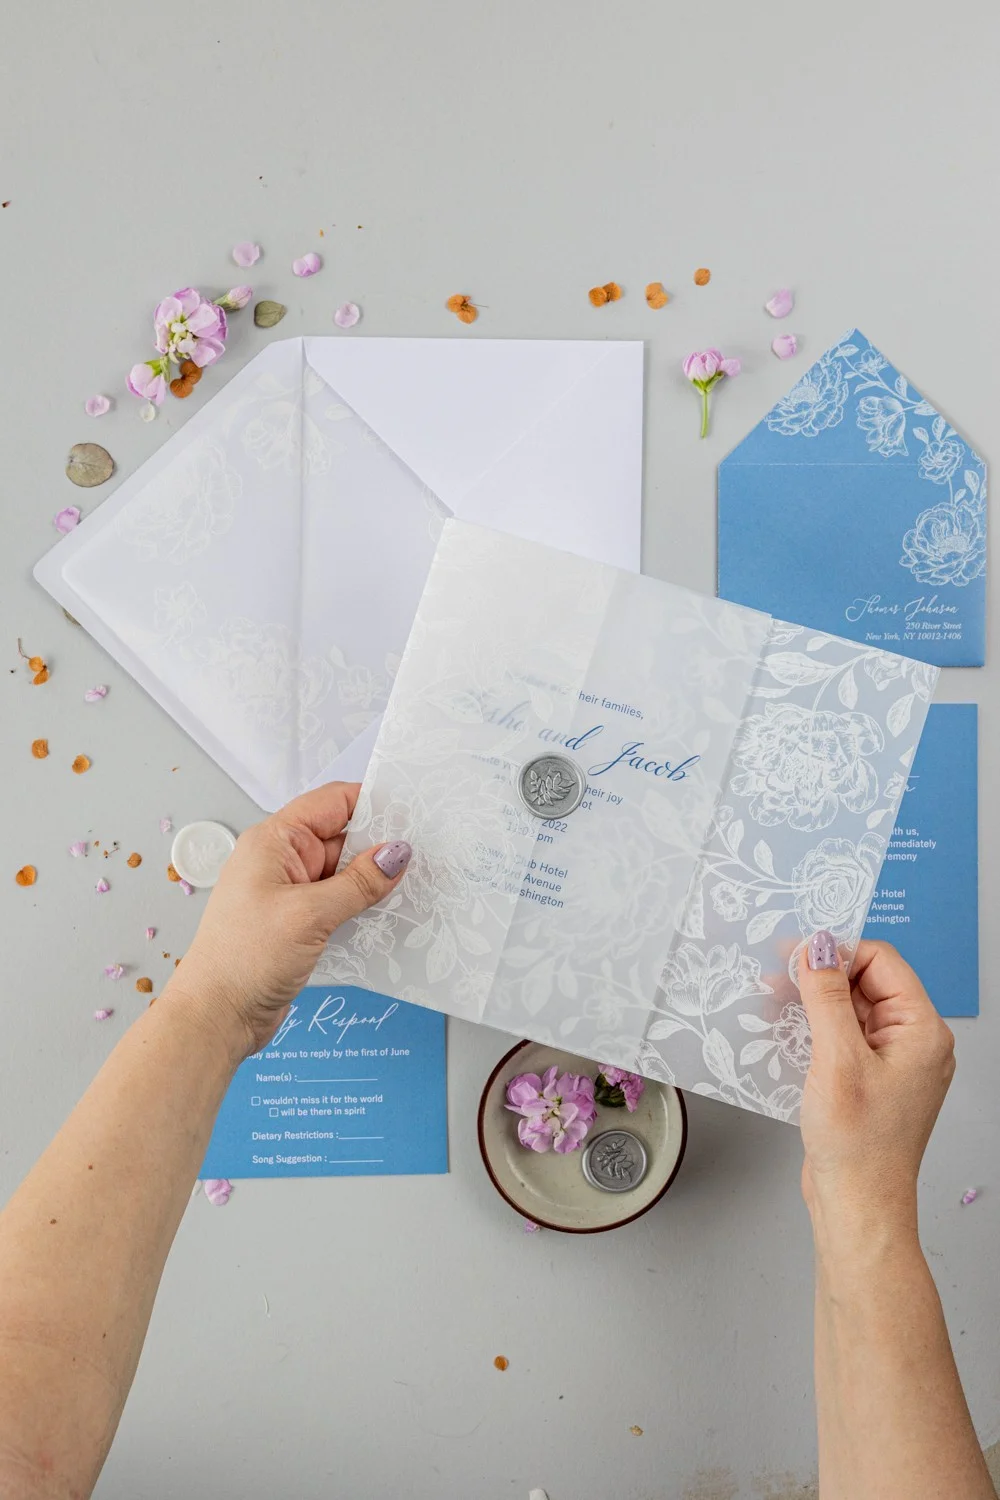 Acrylic wedding invitations, dusty blue Wedding invitations online